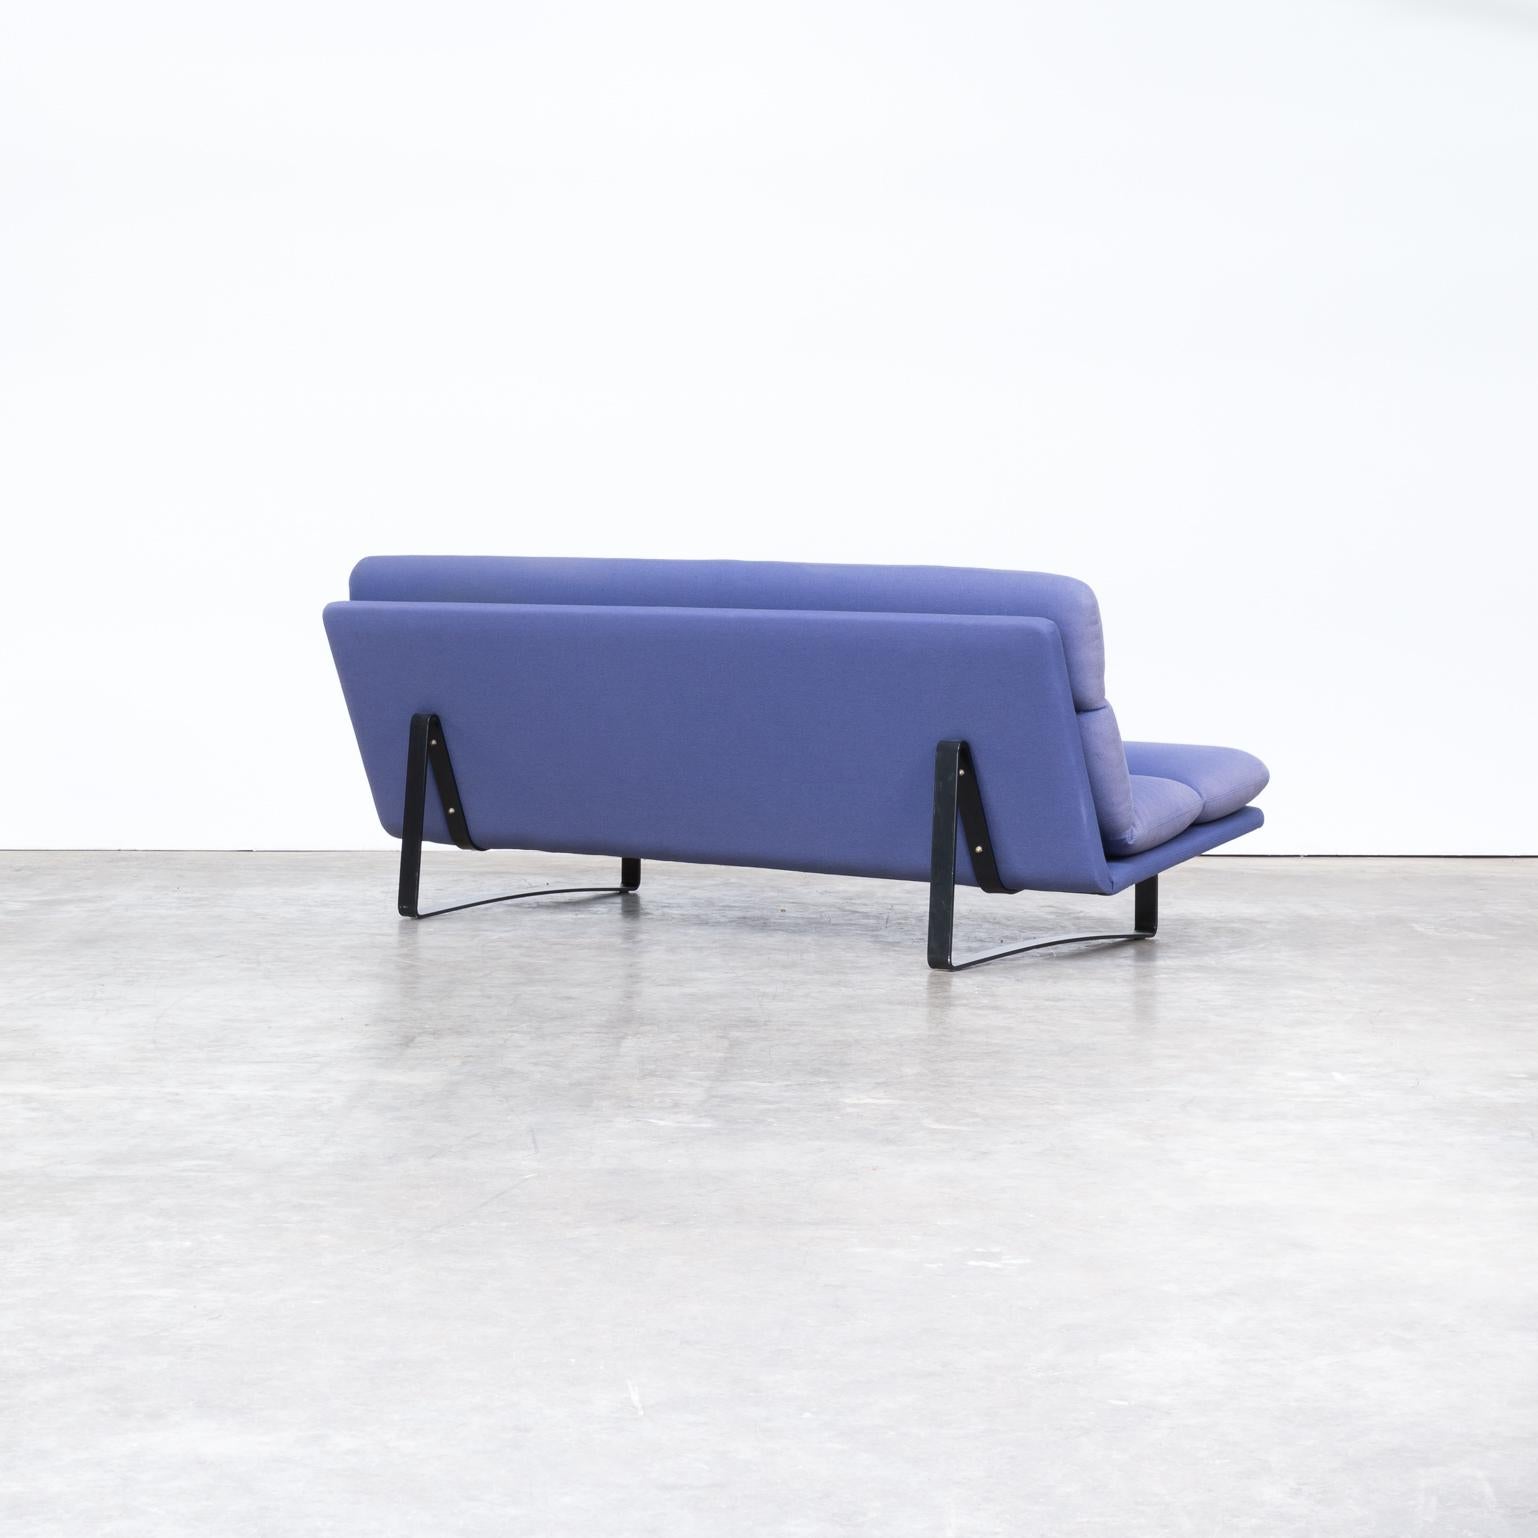 Mid-20th Century Kho Liang Ie C684 wood and blue velvet sofa for Artifort, 60s For Sale